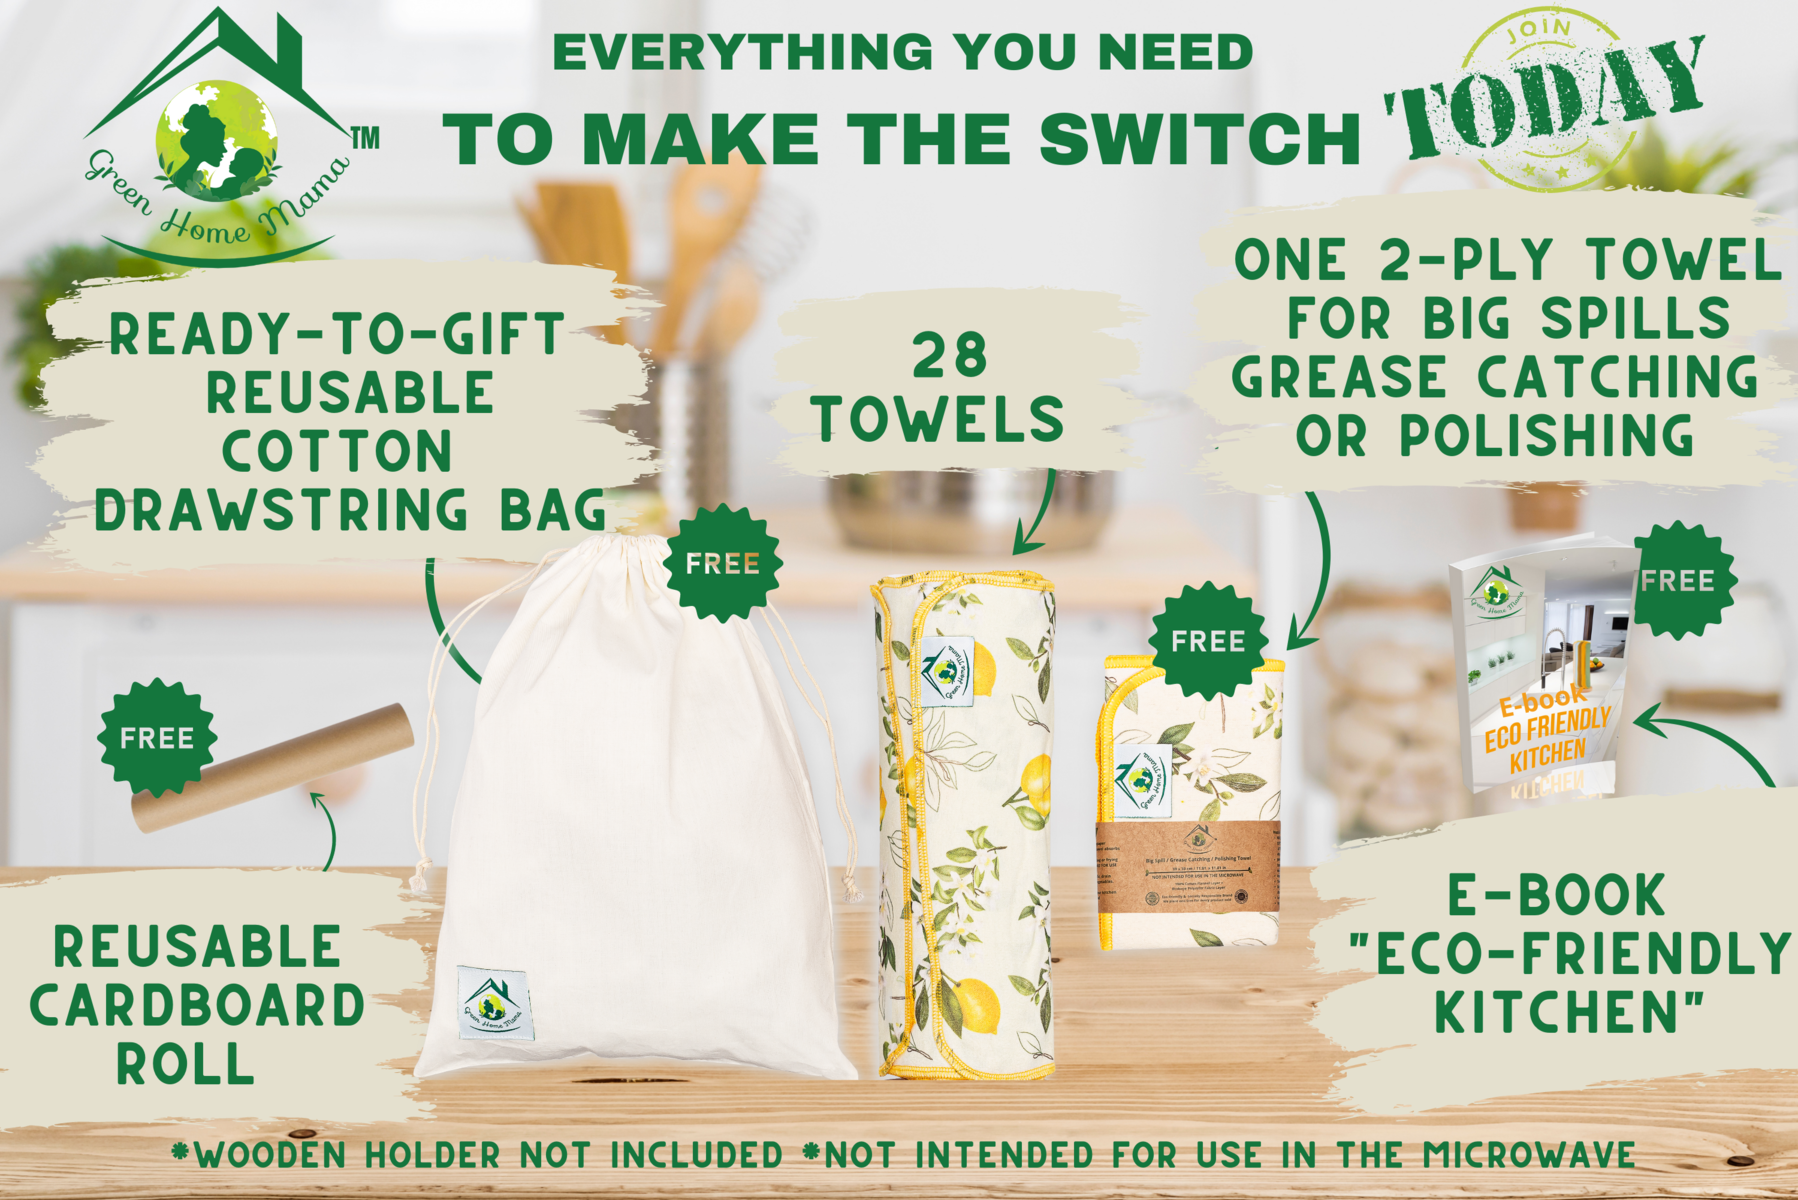 Top Reusable Cotton Flannel Paper Towels Make Your Kitchen & Home Eco-Friendly